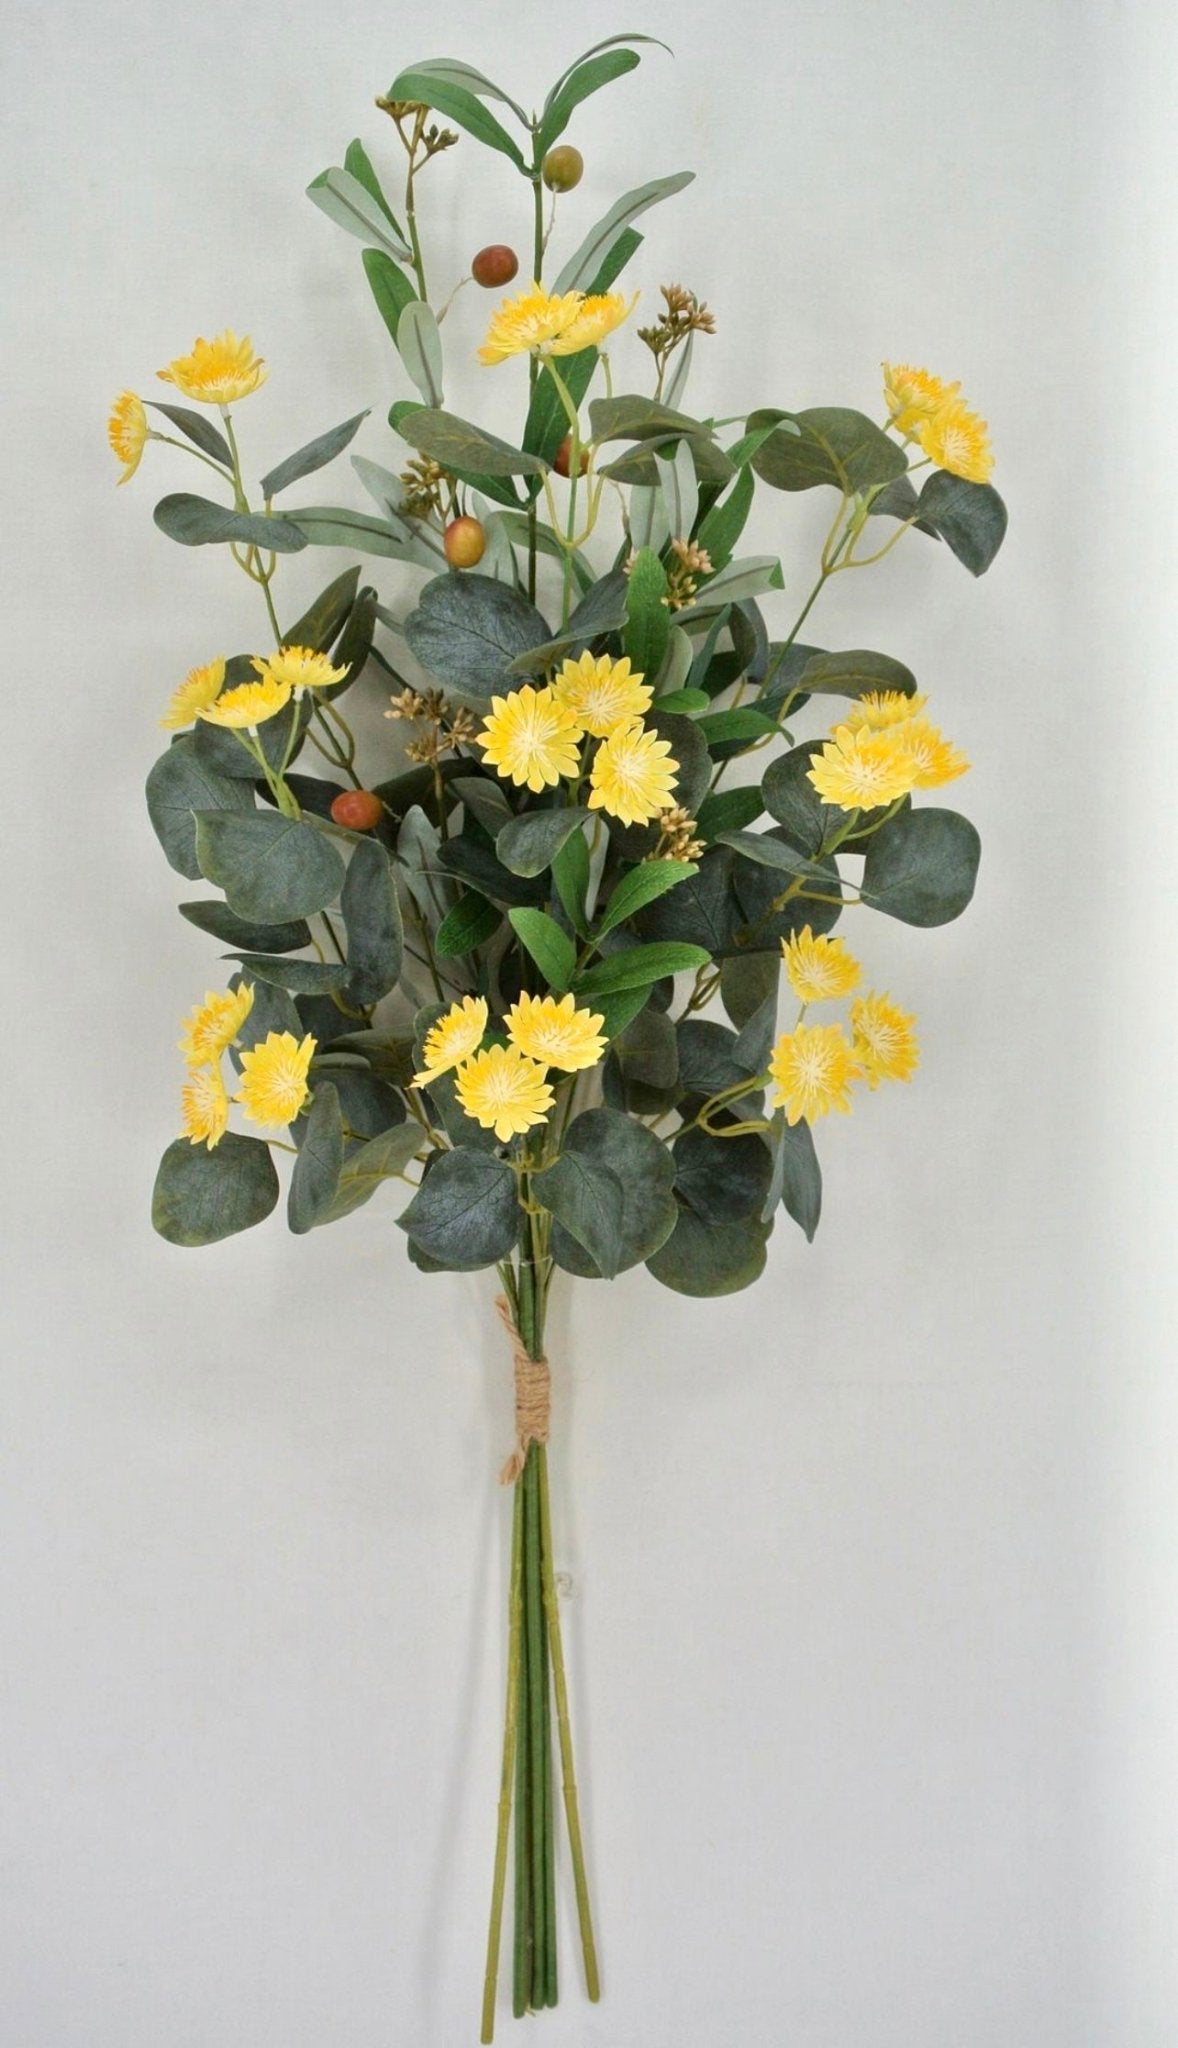 Mixed eucalyptus and flower bundle - Greenery Market83534-yel